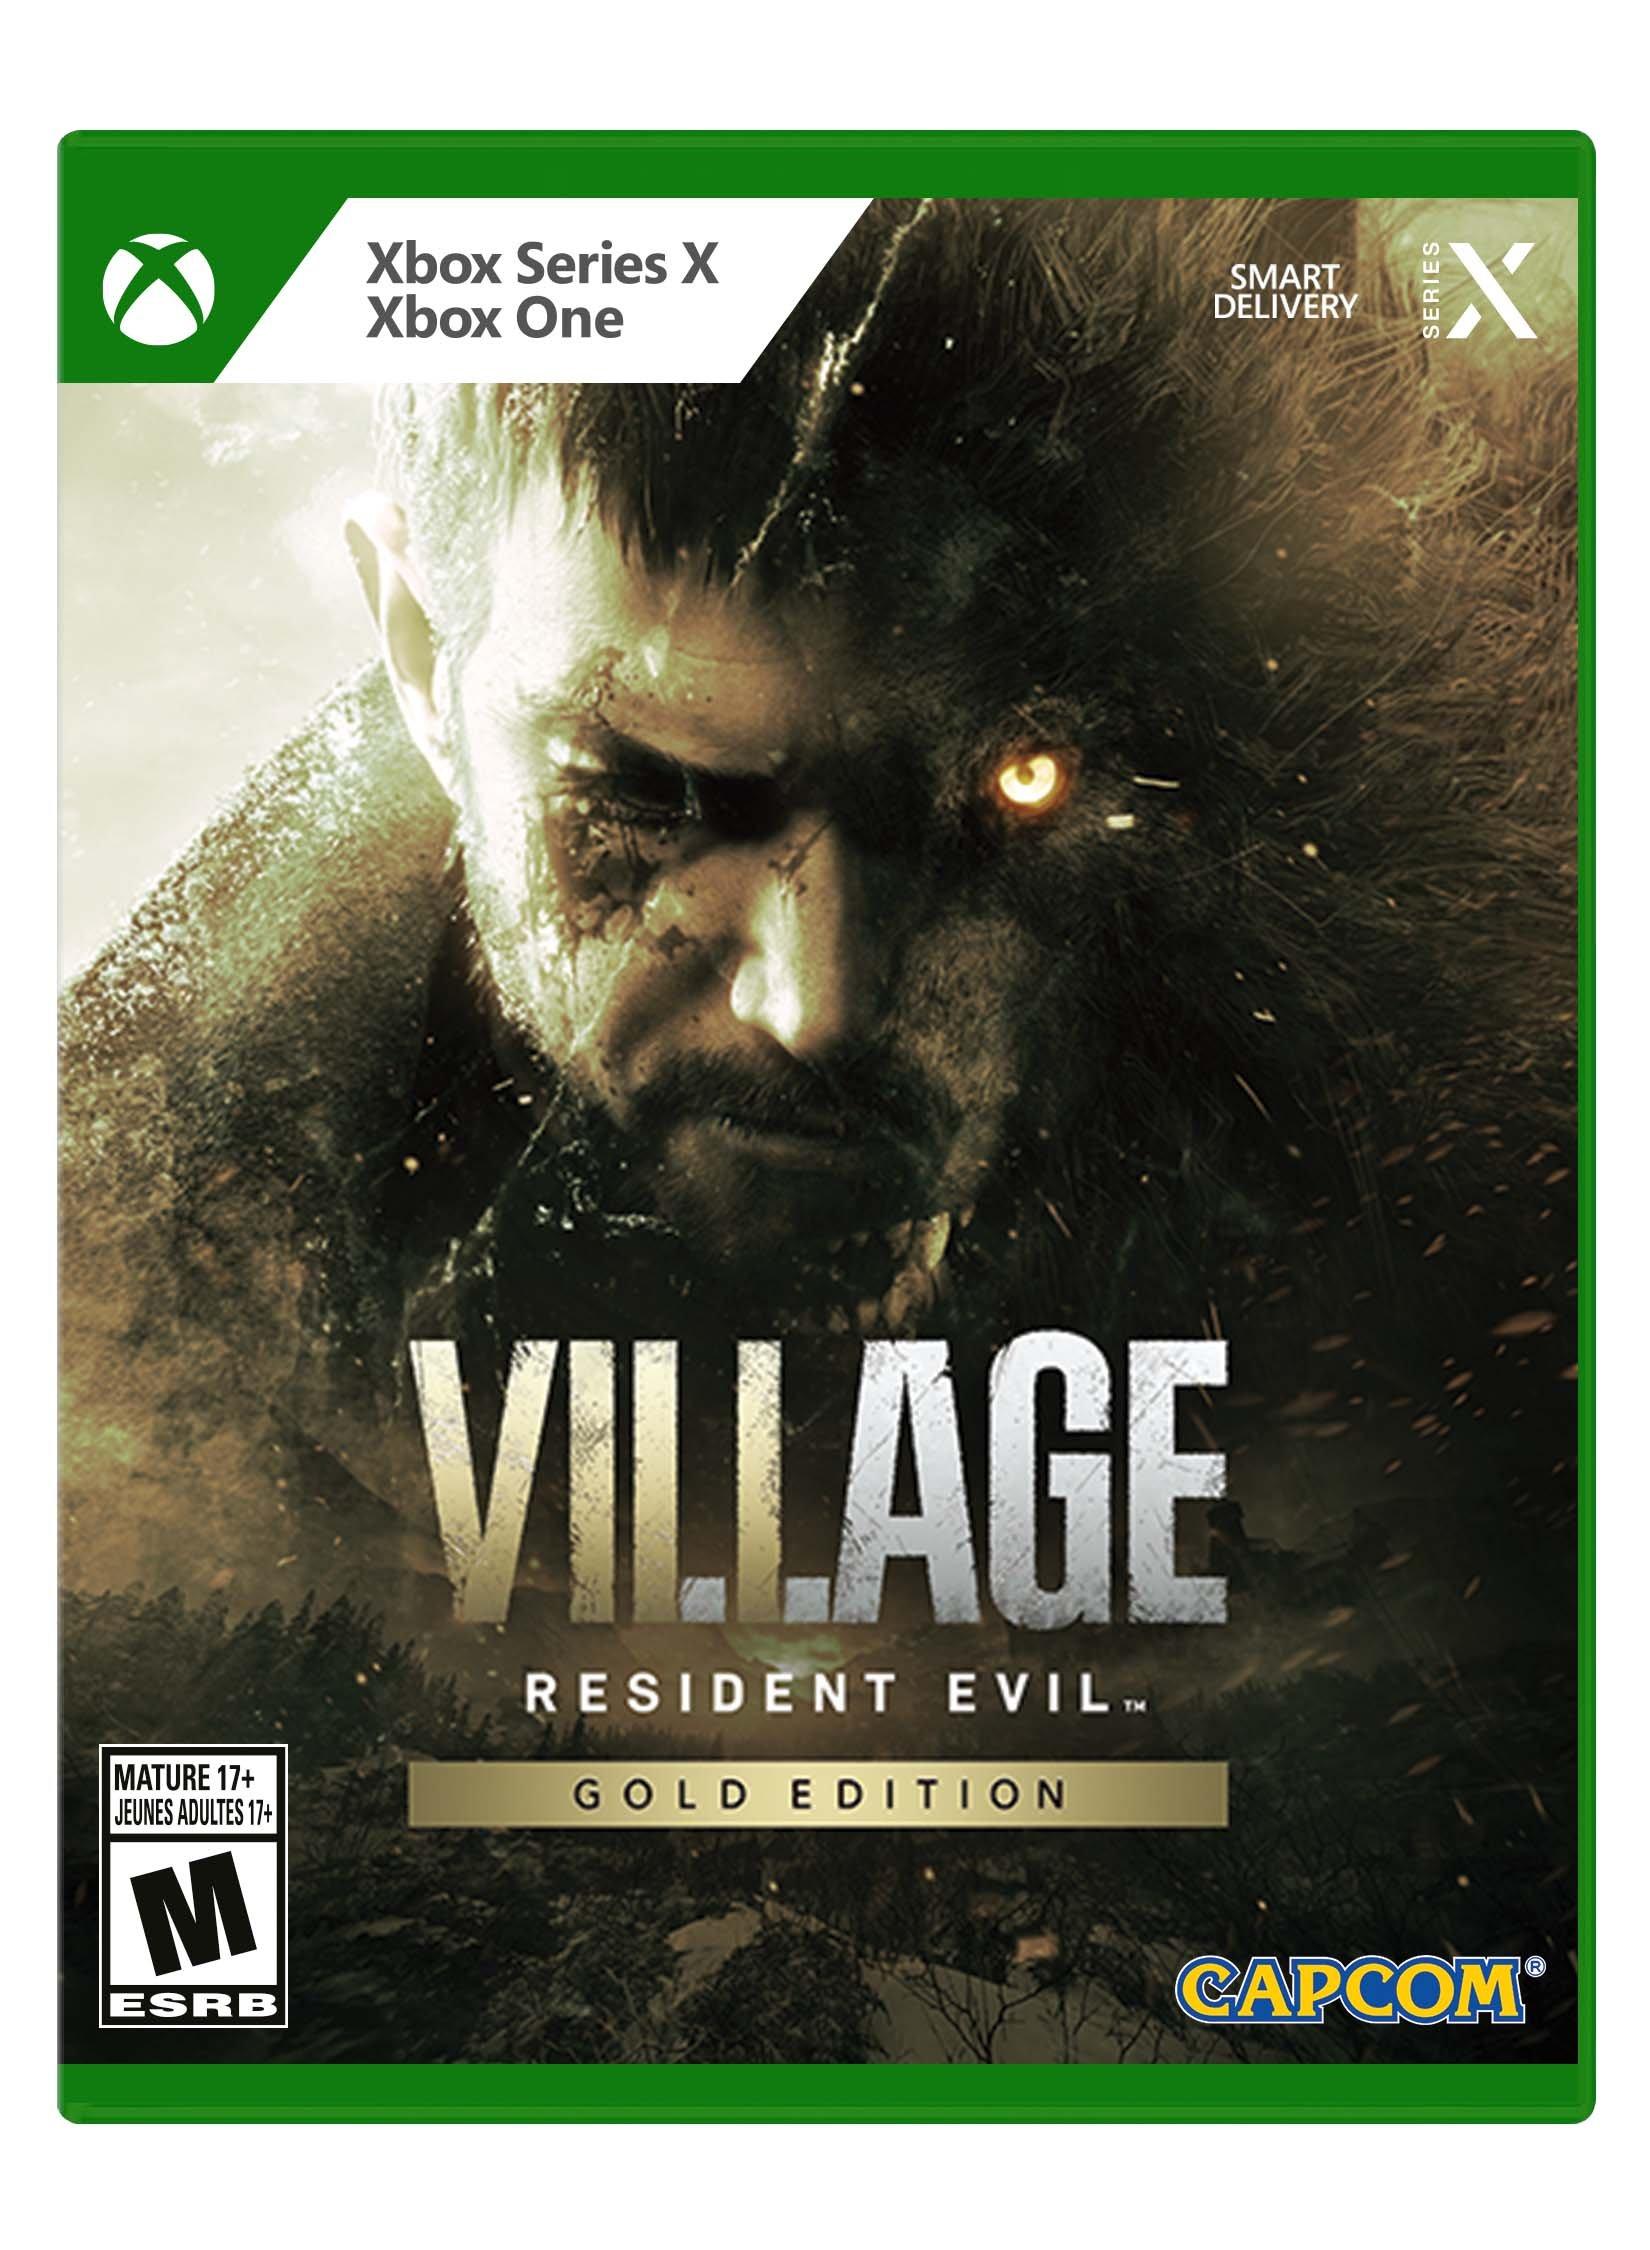 Resident Evil Village Gold Edition - Xbox Series X (Capcom), New - GameStop